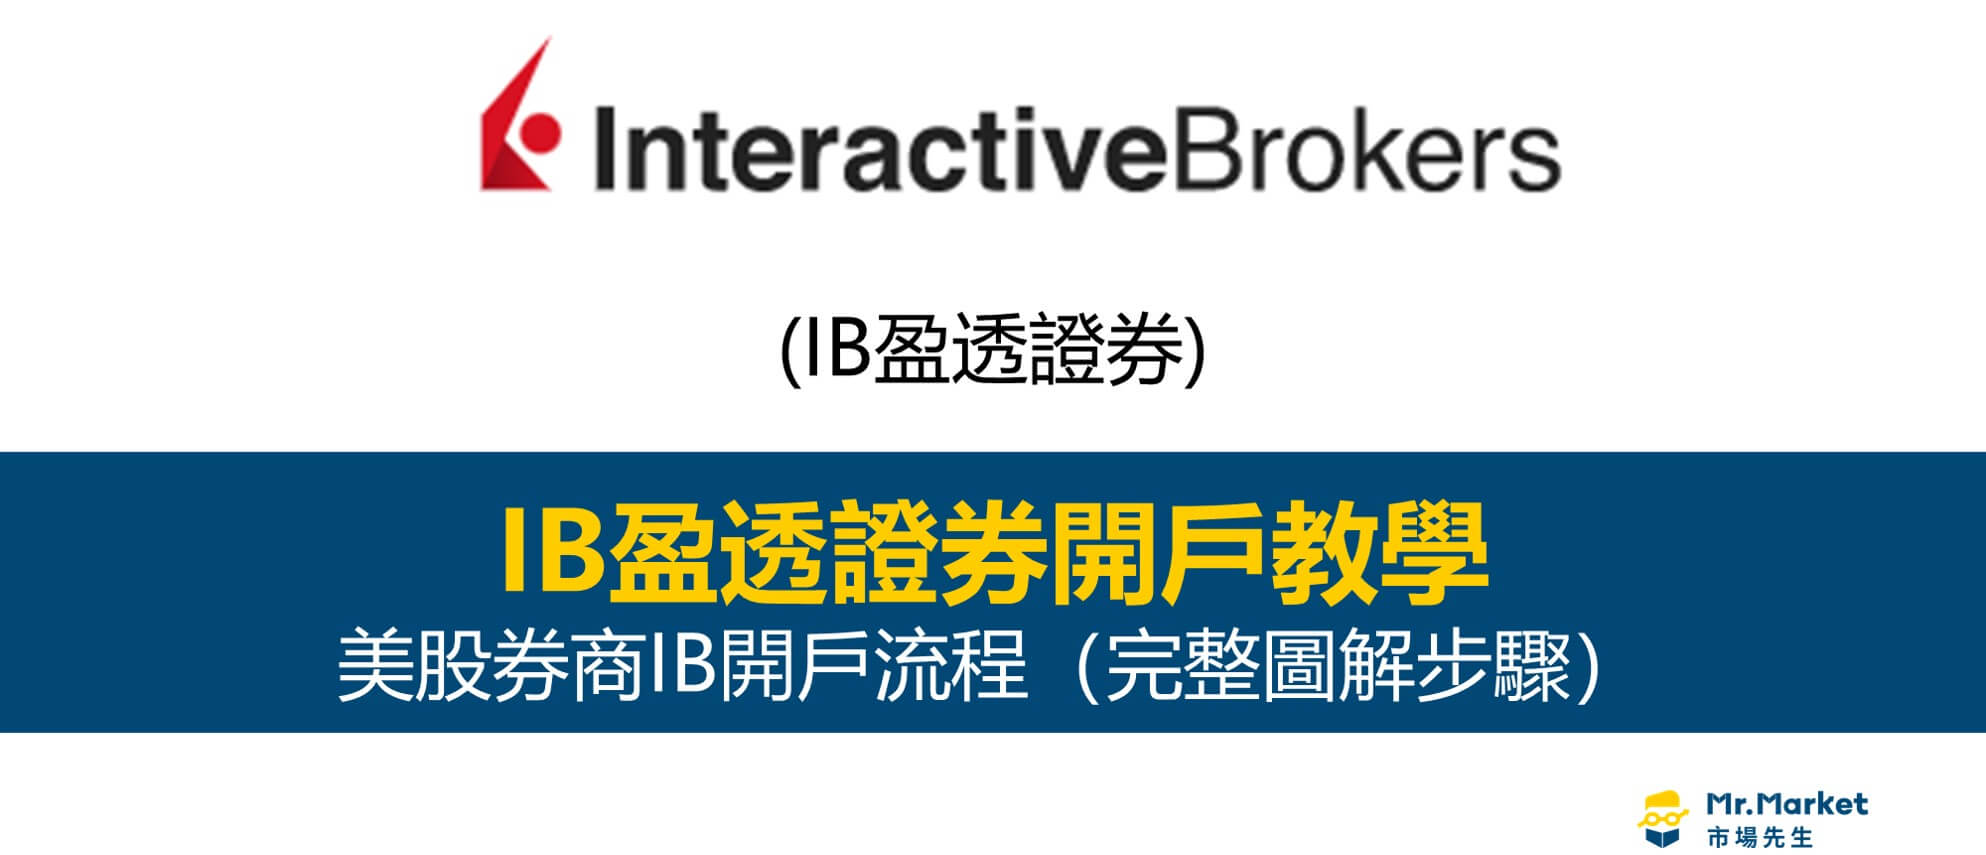 IB盈透證券開戶流程教學/完整中文圖解步驟